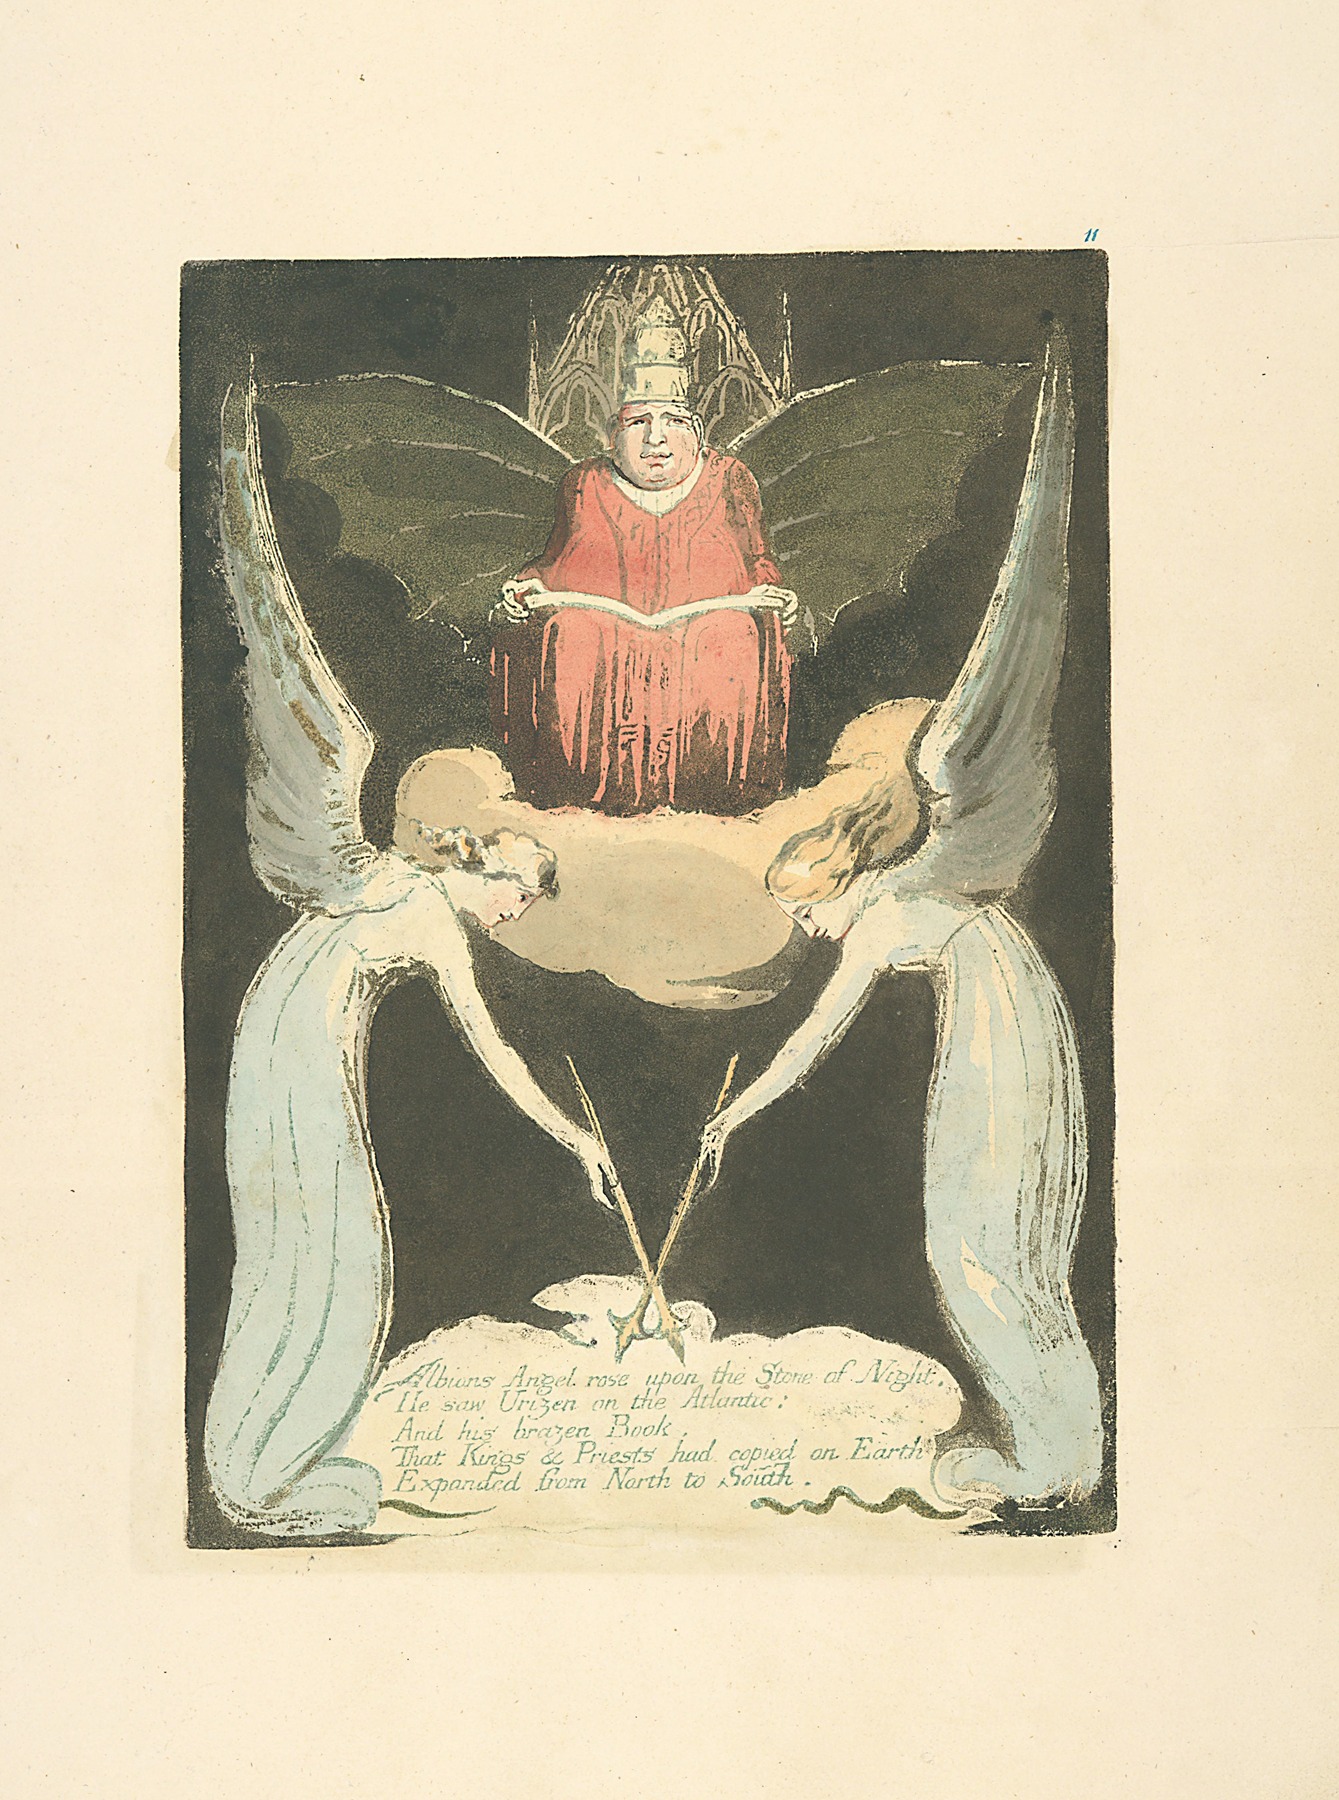 William Blake - Albions Angel rose upon….